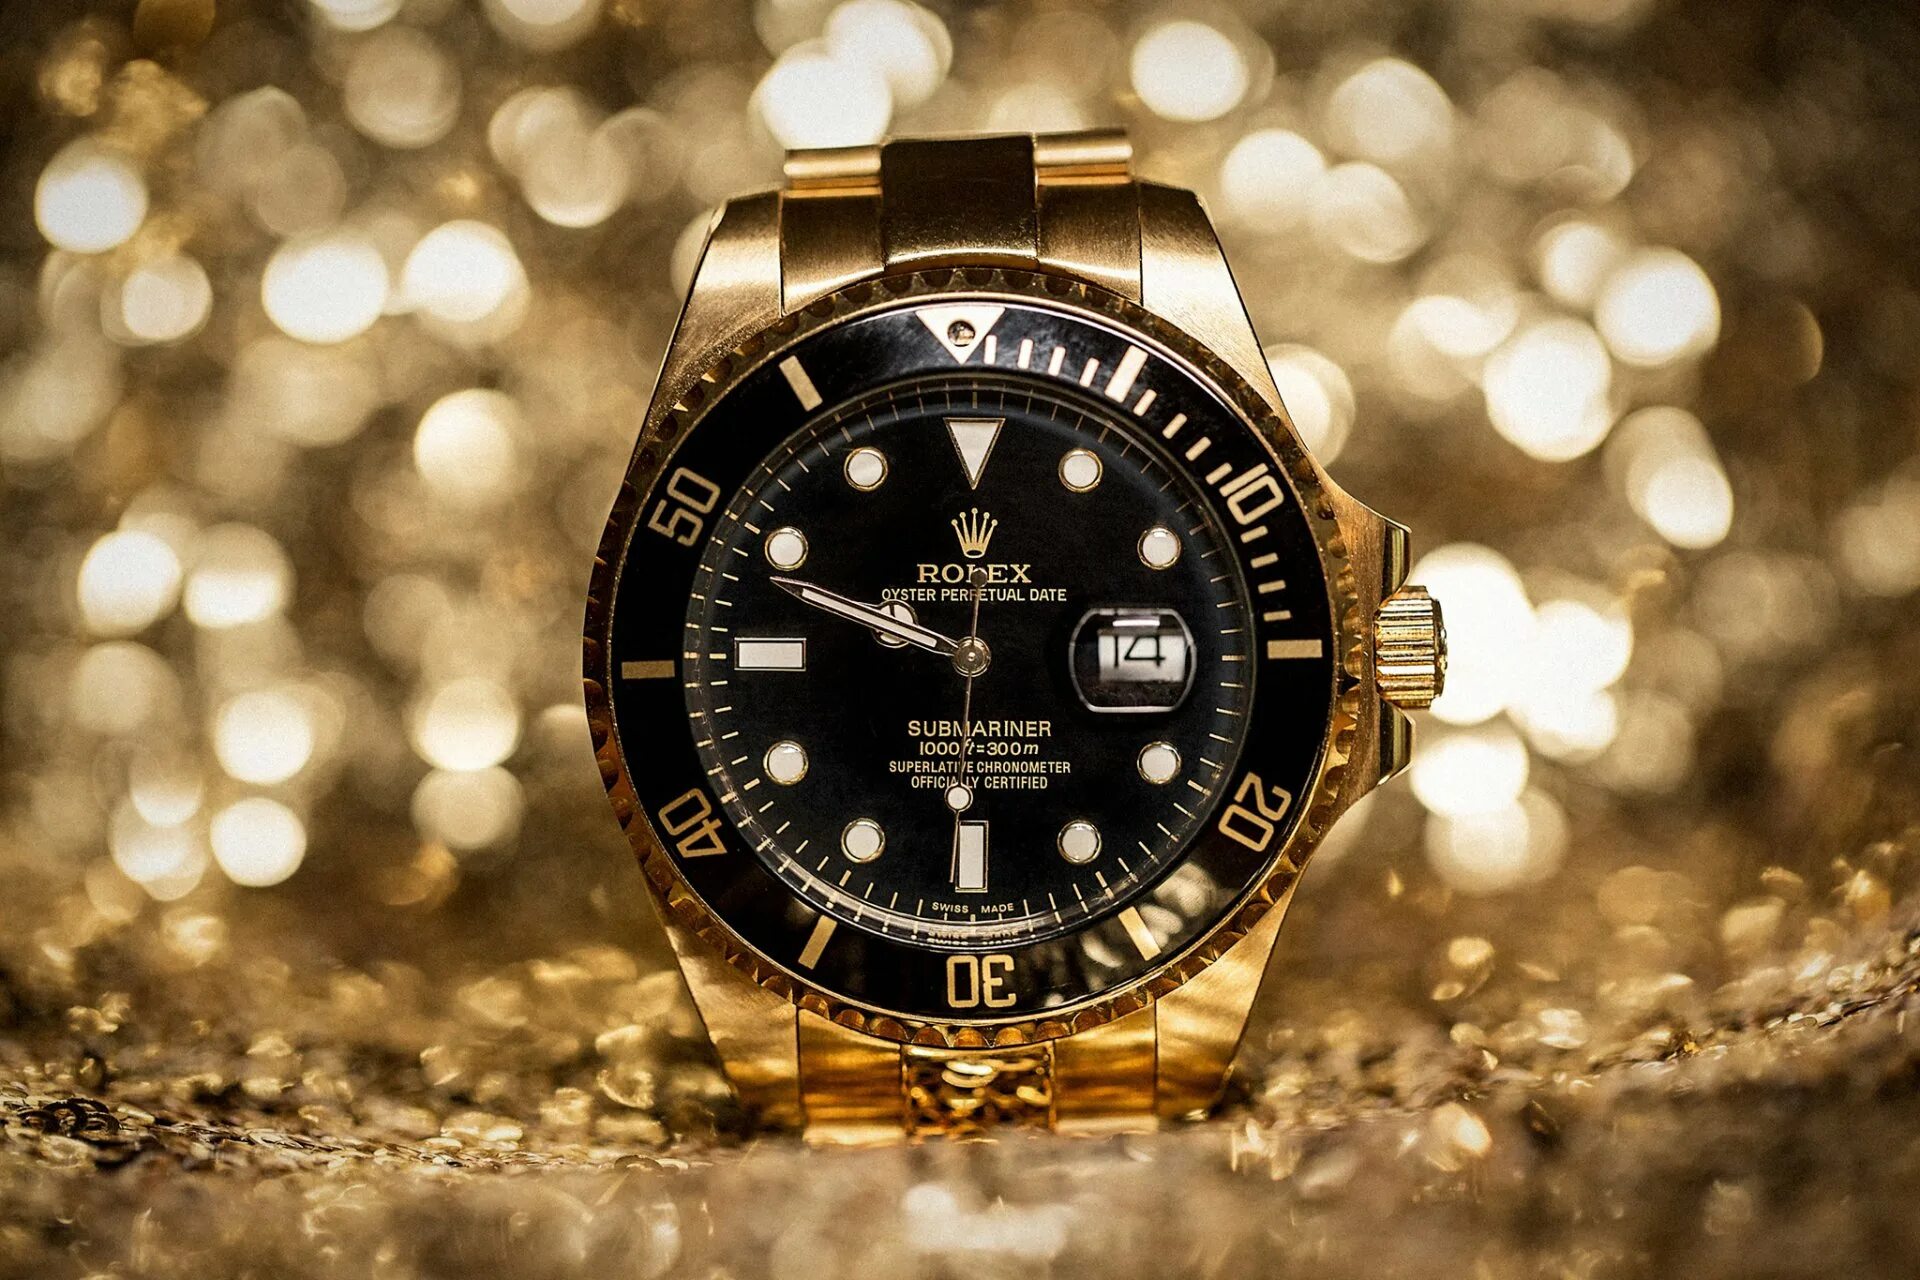 Фото обоев на часы. Часы ролекс. Rolex watch. Часы ролекс золото.